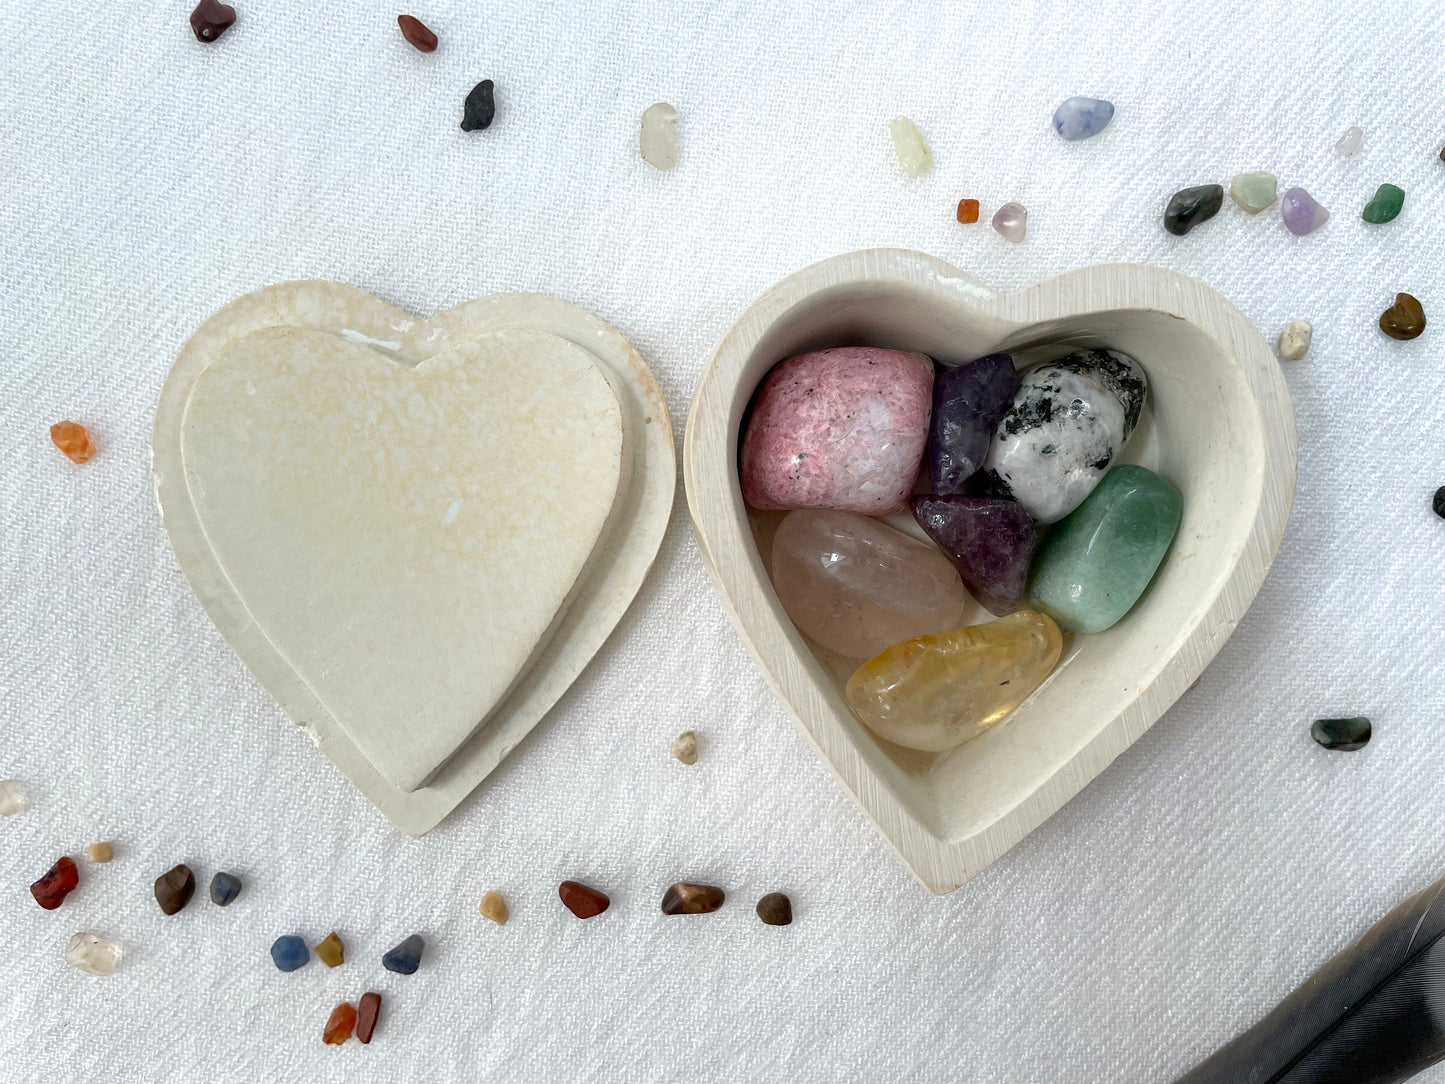 Crystal Prescription for Self Love in Soapstone Box